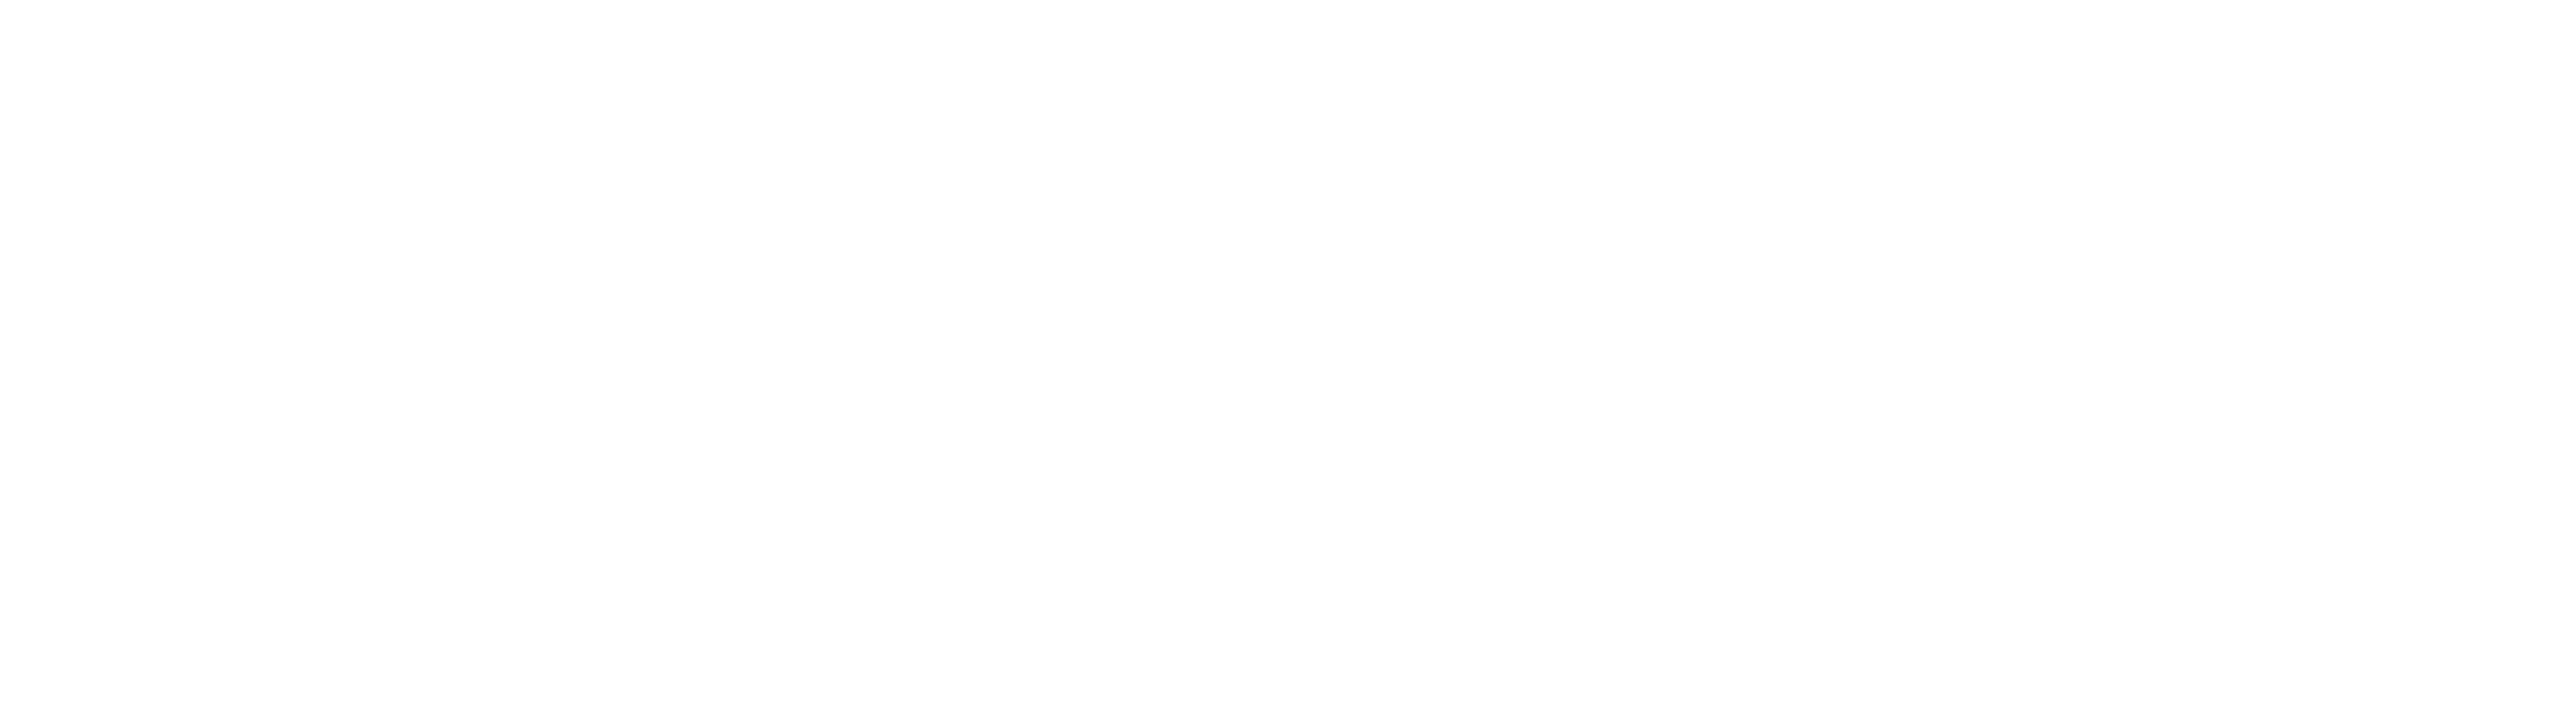 Padmaja Penmetsa Joypreneur